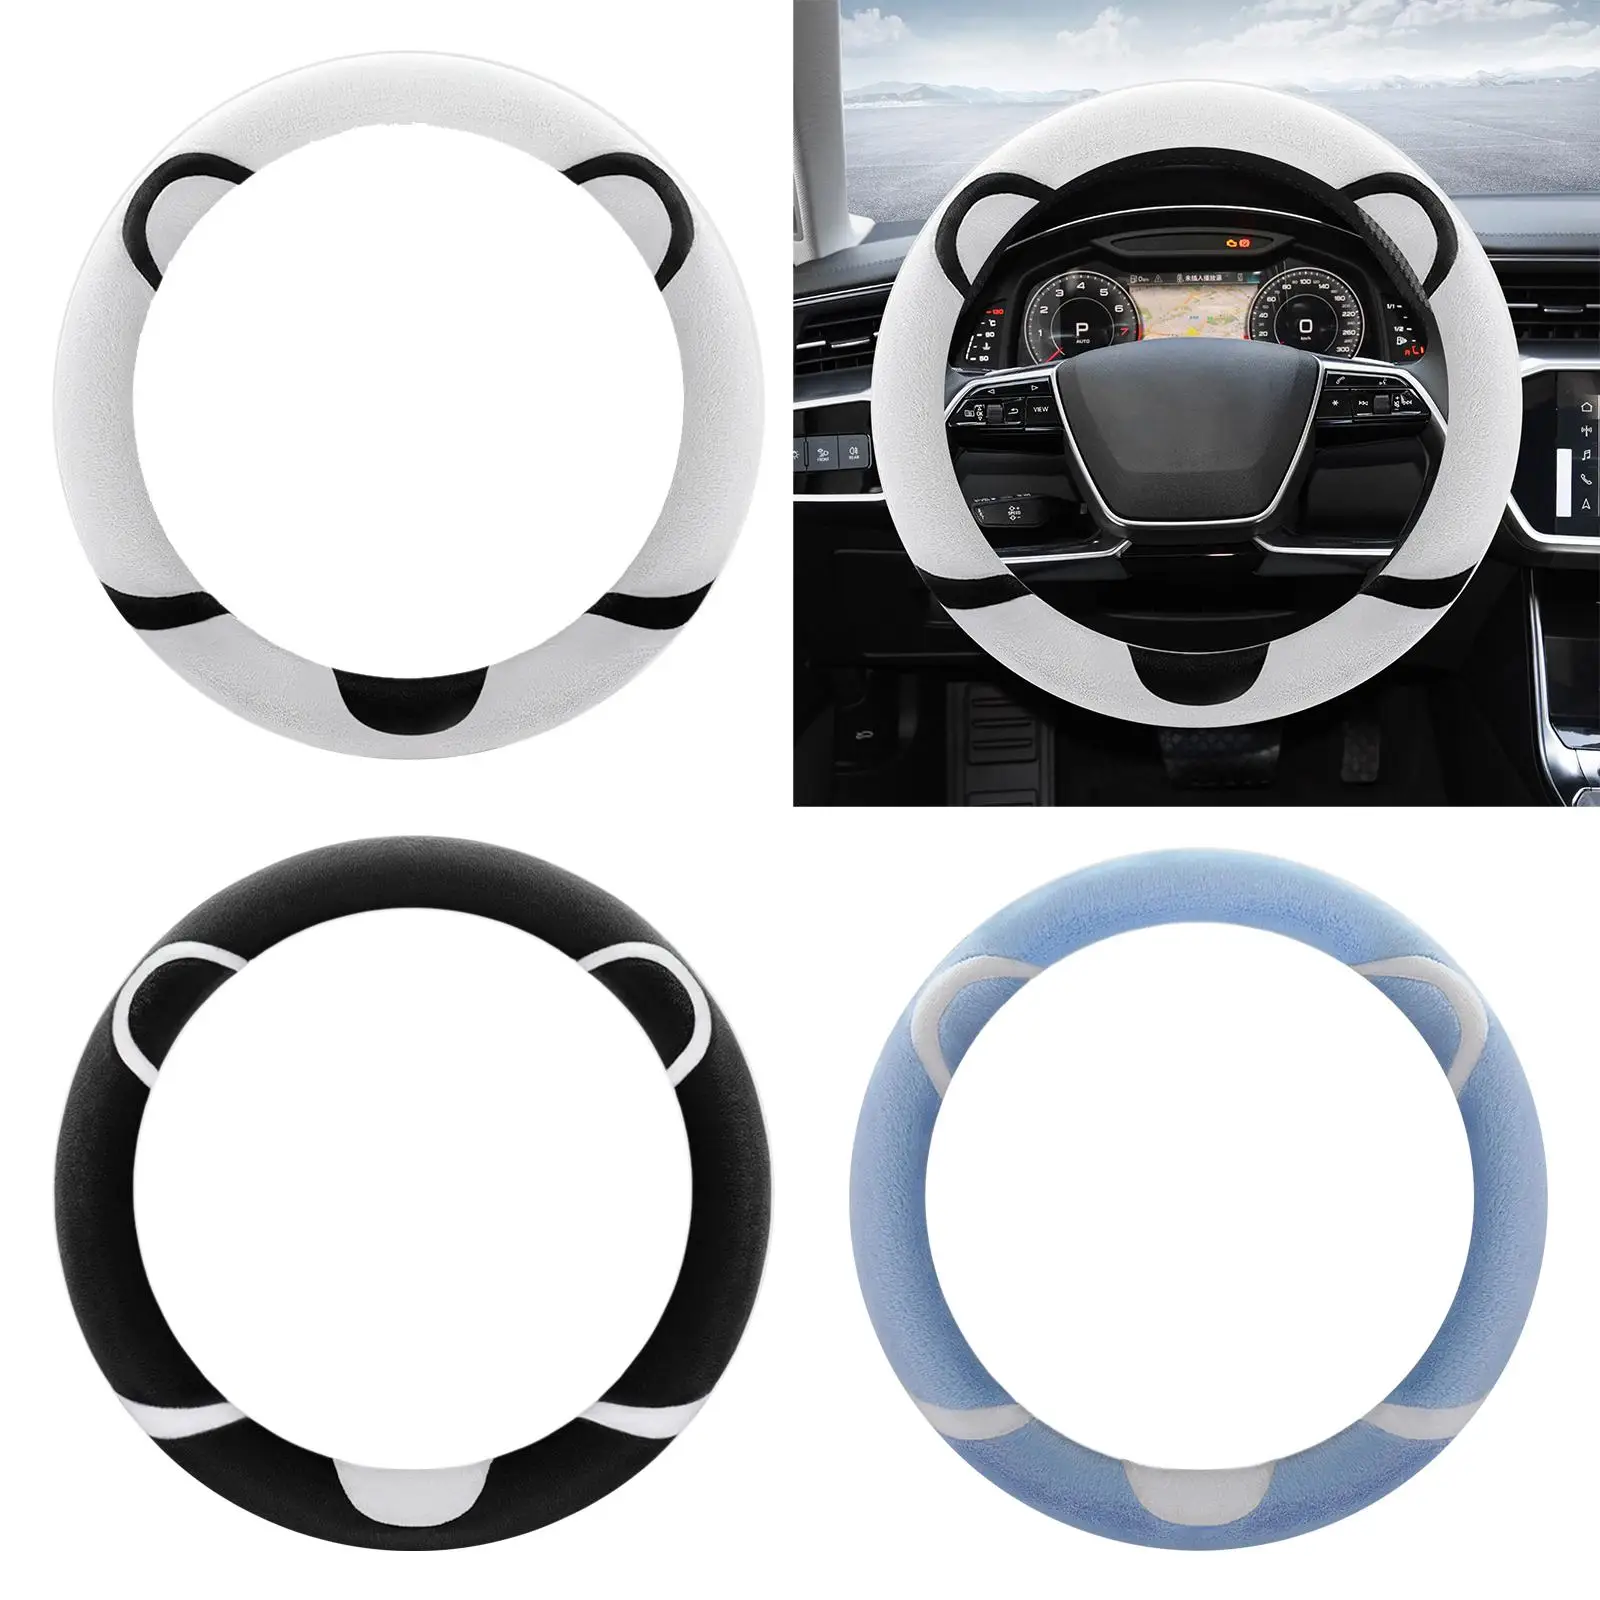 Round Car Steering Wheel Cover Universal Comfortable Wear Resistant Sleeve